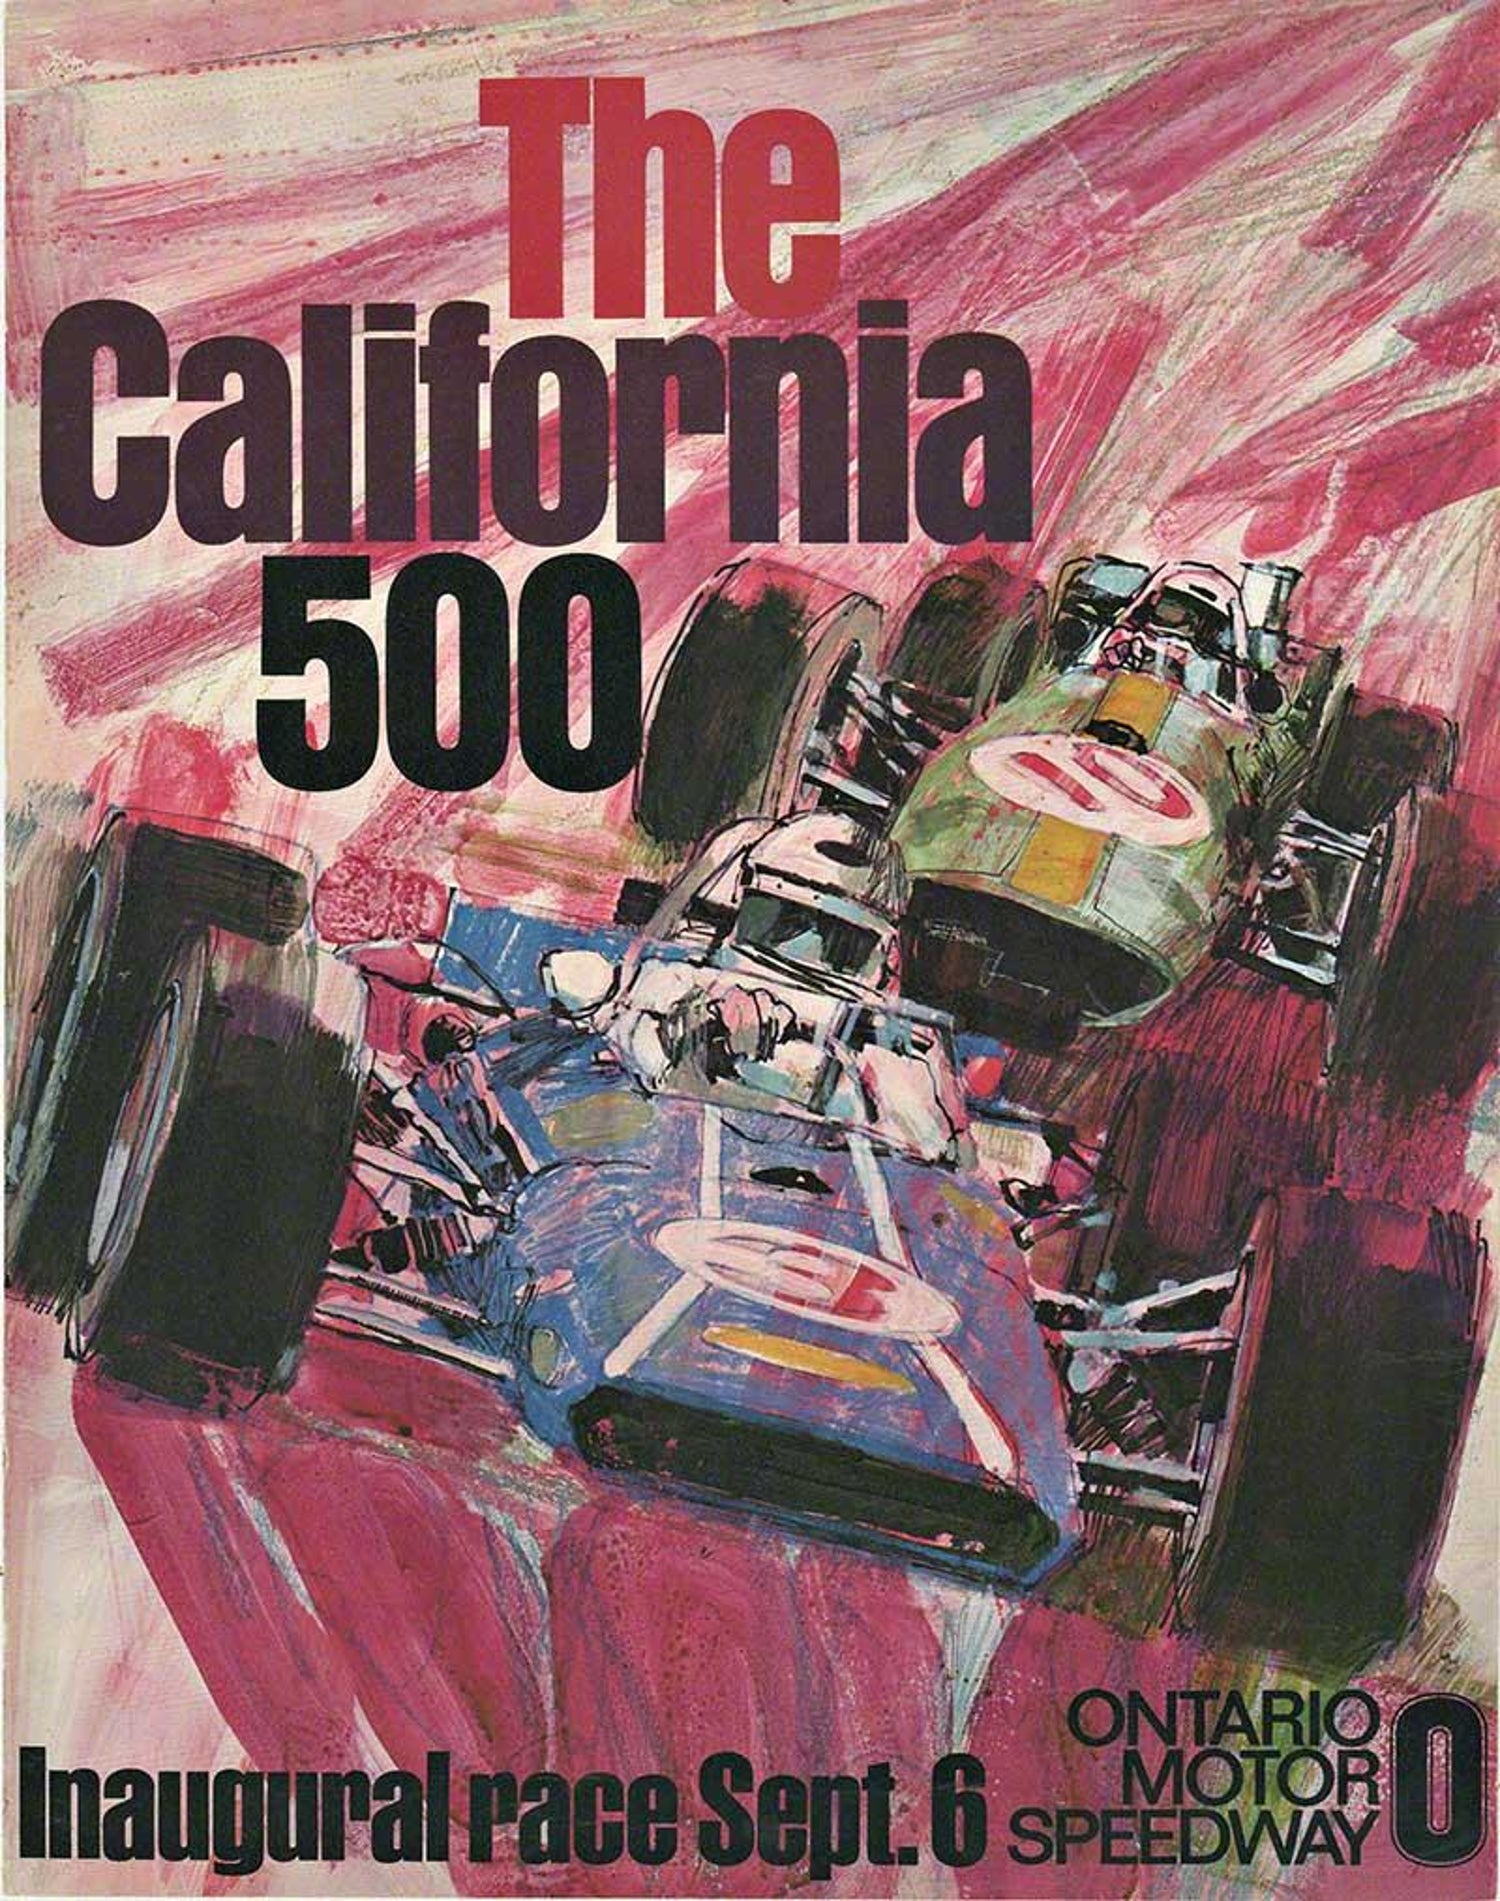 VINTAGE ONTARIO MOTOR SPEEDWAY RACING PATCH CALIFORNIA 500 INDY NASCAR RACEWAY 